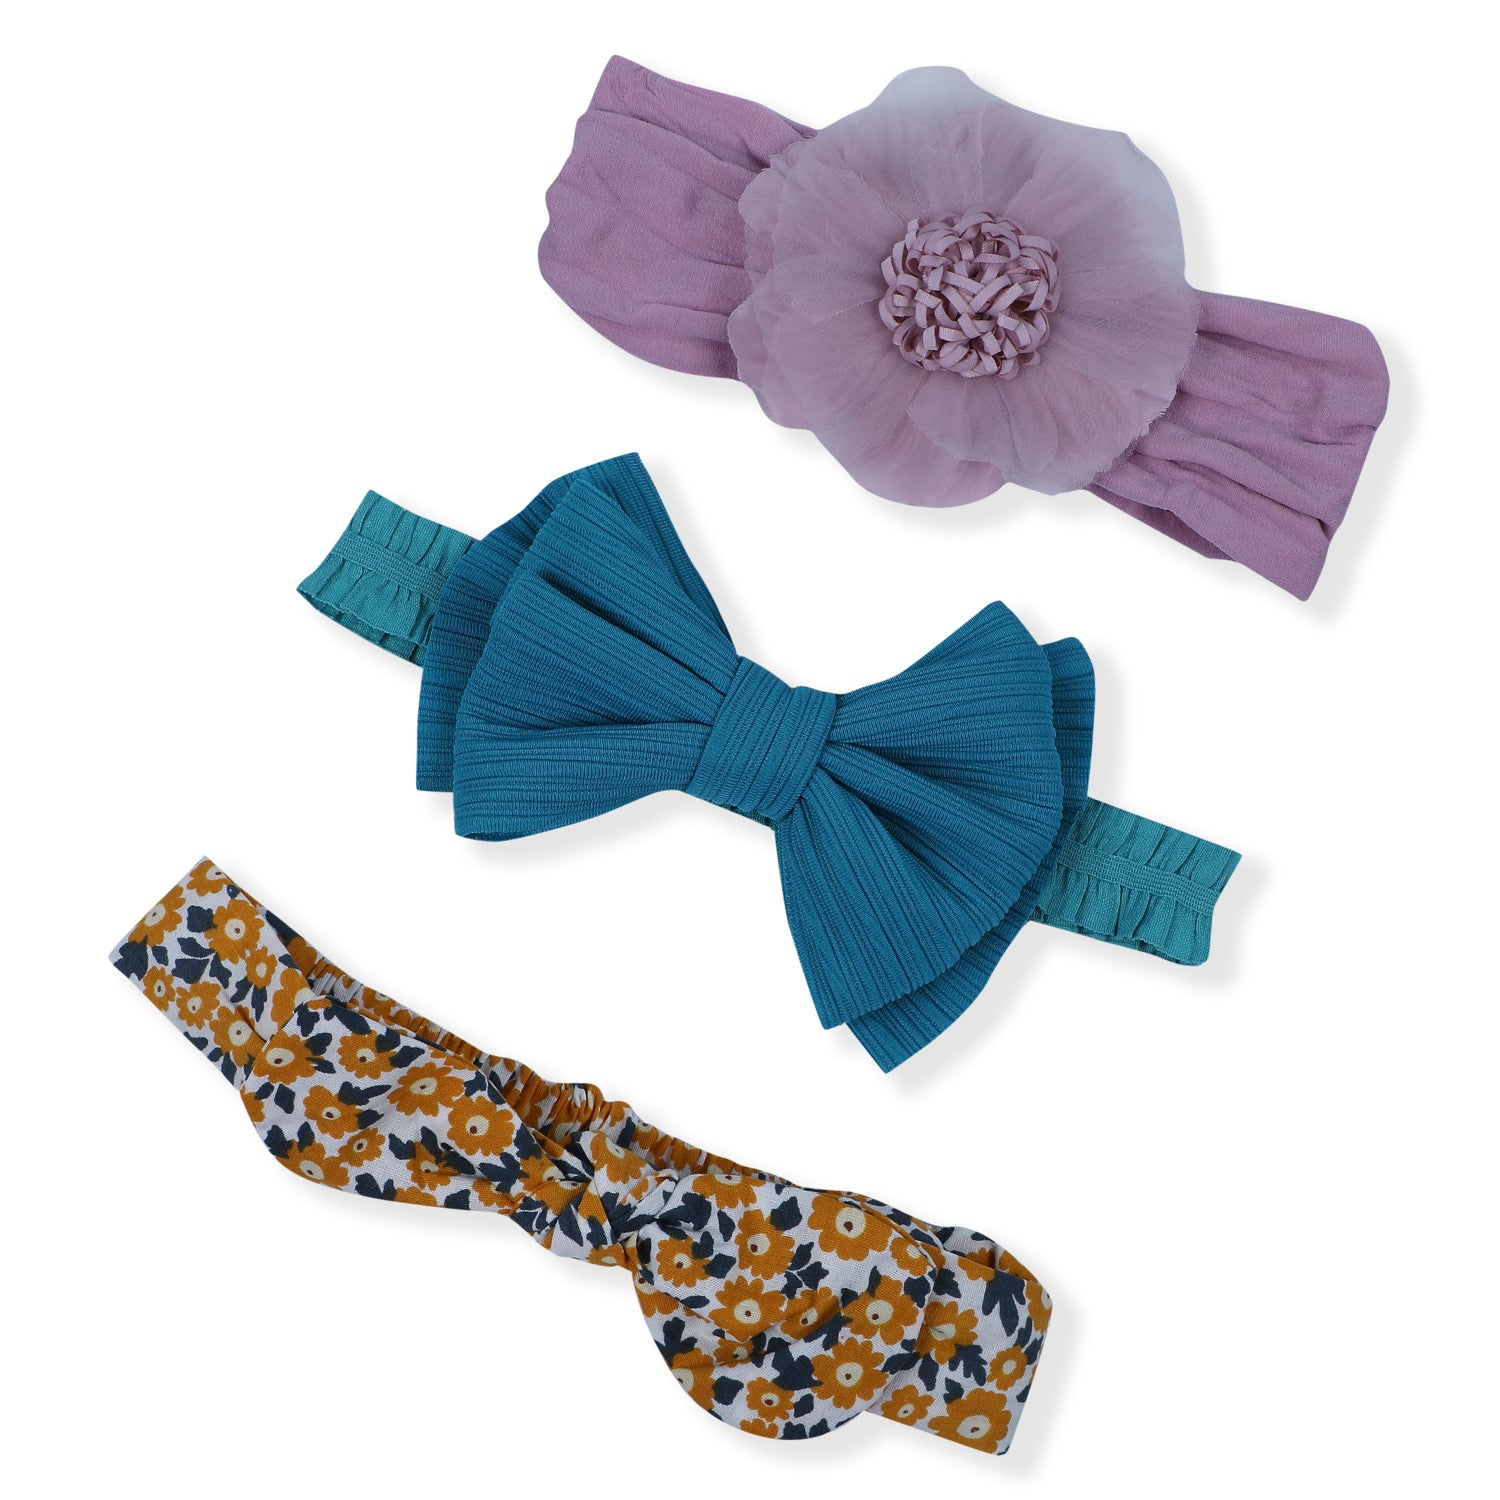 Baby Moo Floral Bow Headband Set of 3 - Multicolour - Baby Moo